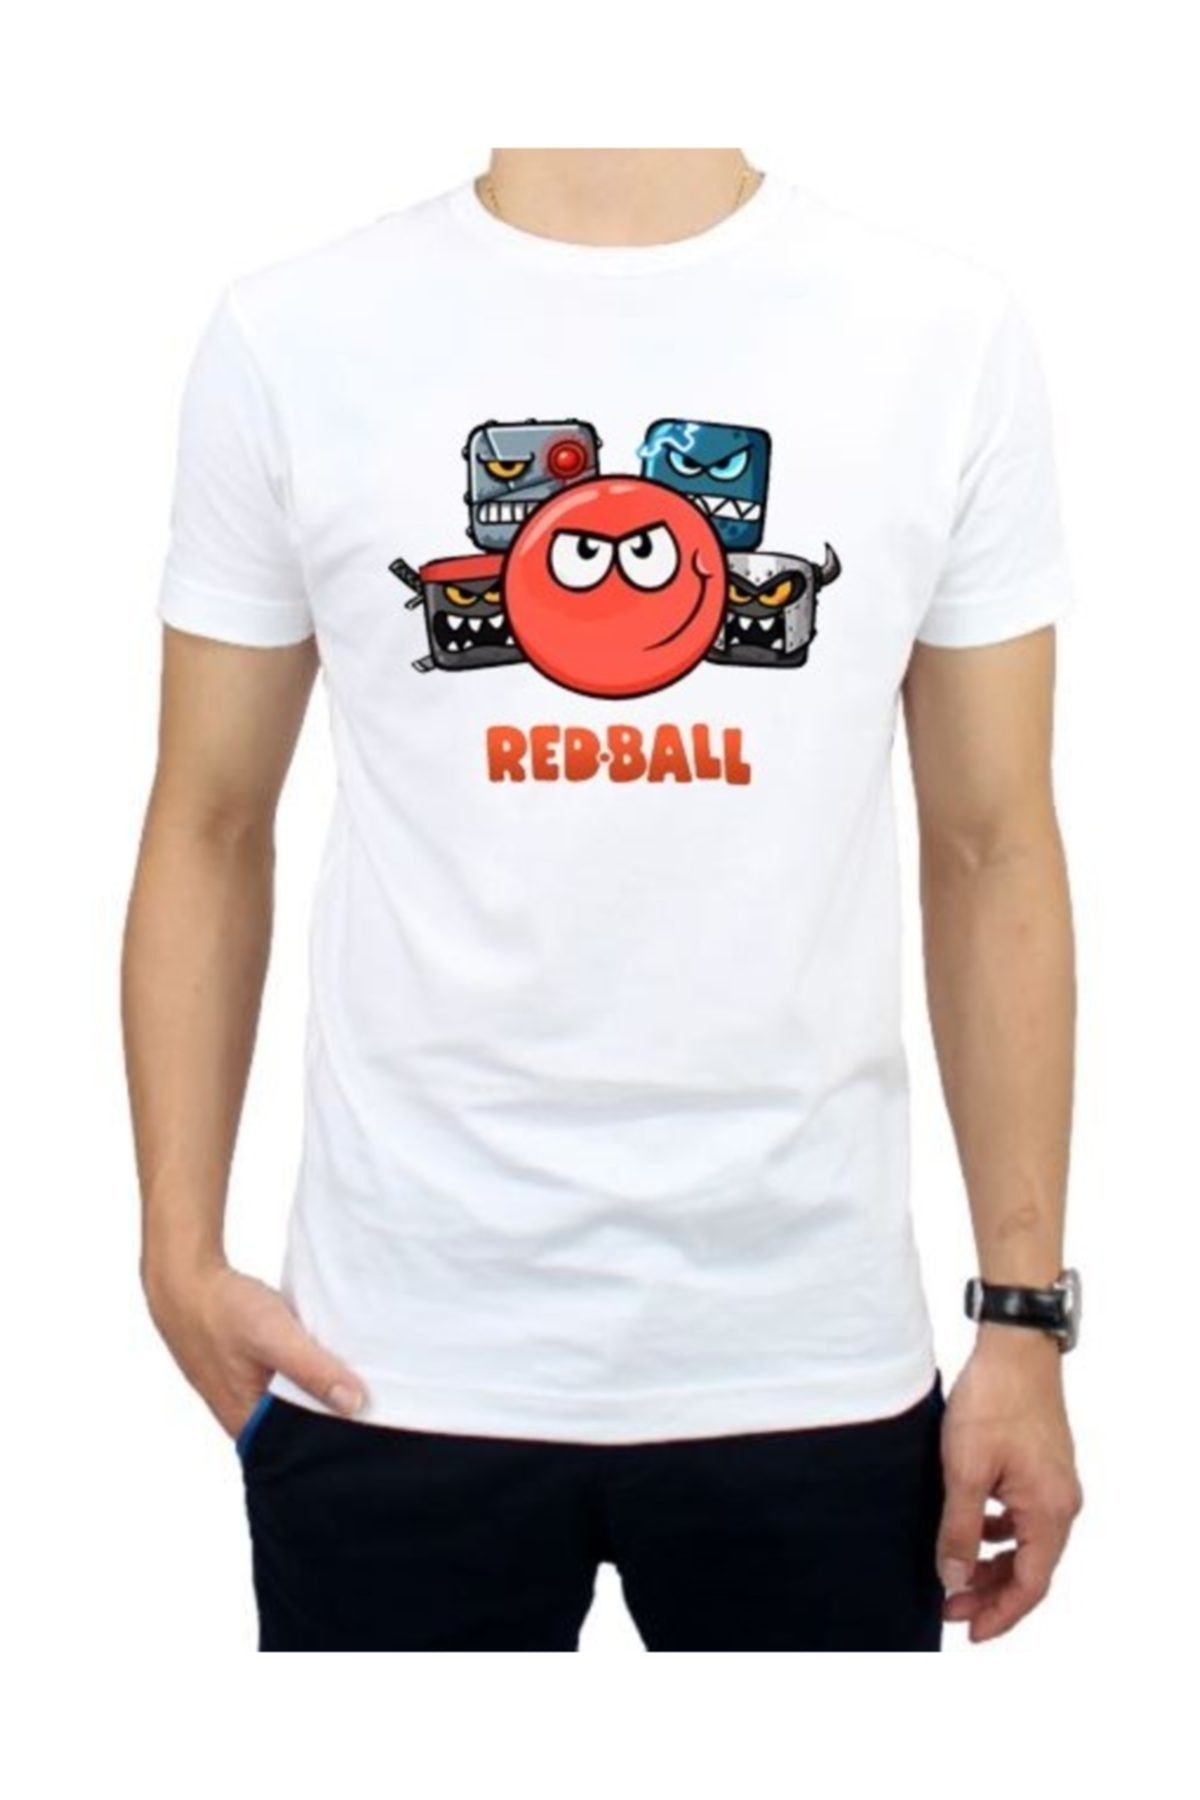 Футболка red ball. Футболка Red Ball 4. Red Ball 4 футболка детская. Майка красный шарик. Майка Red Ball 4.